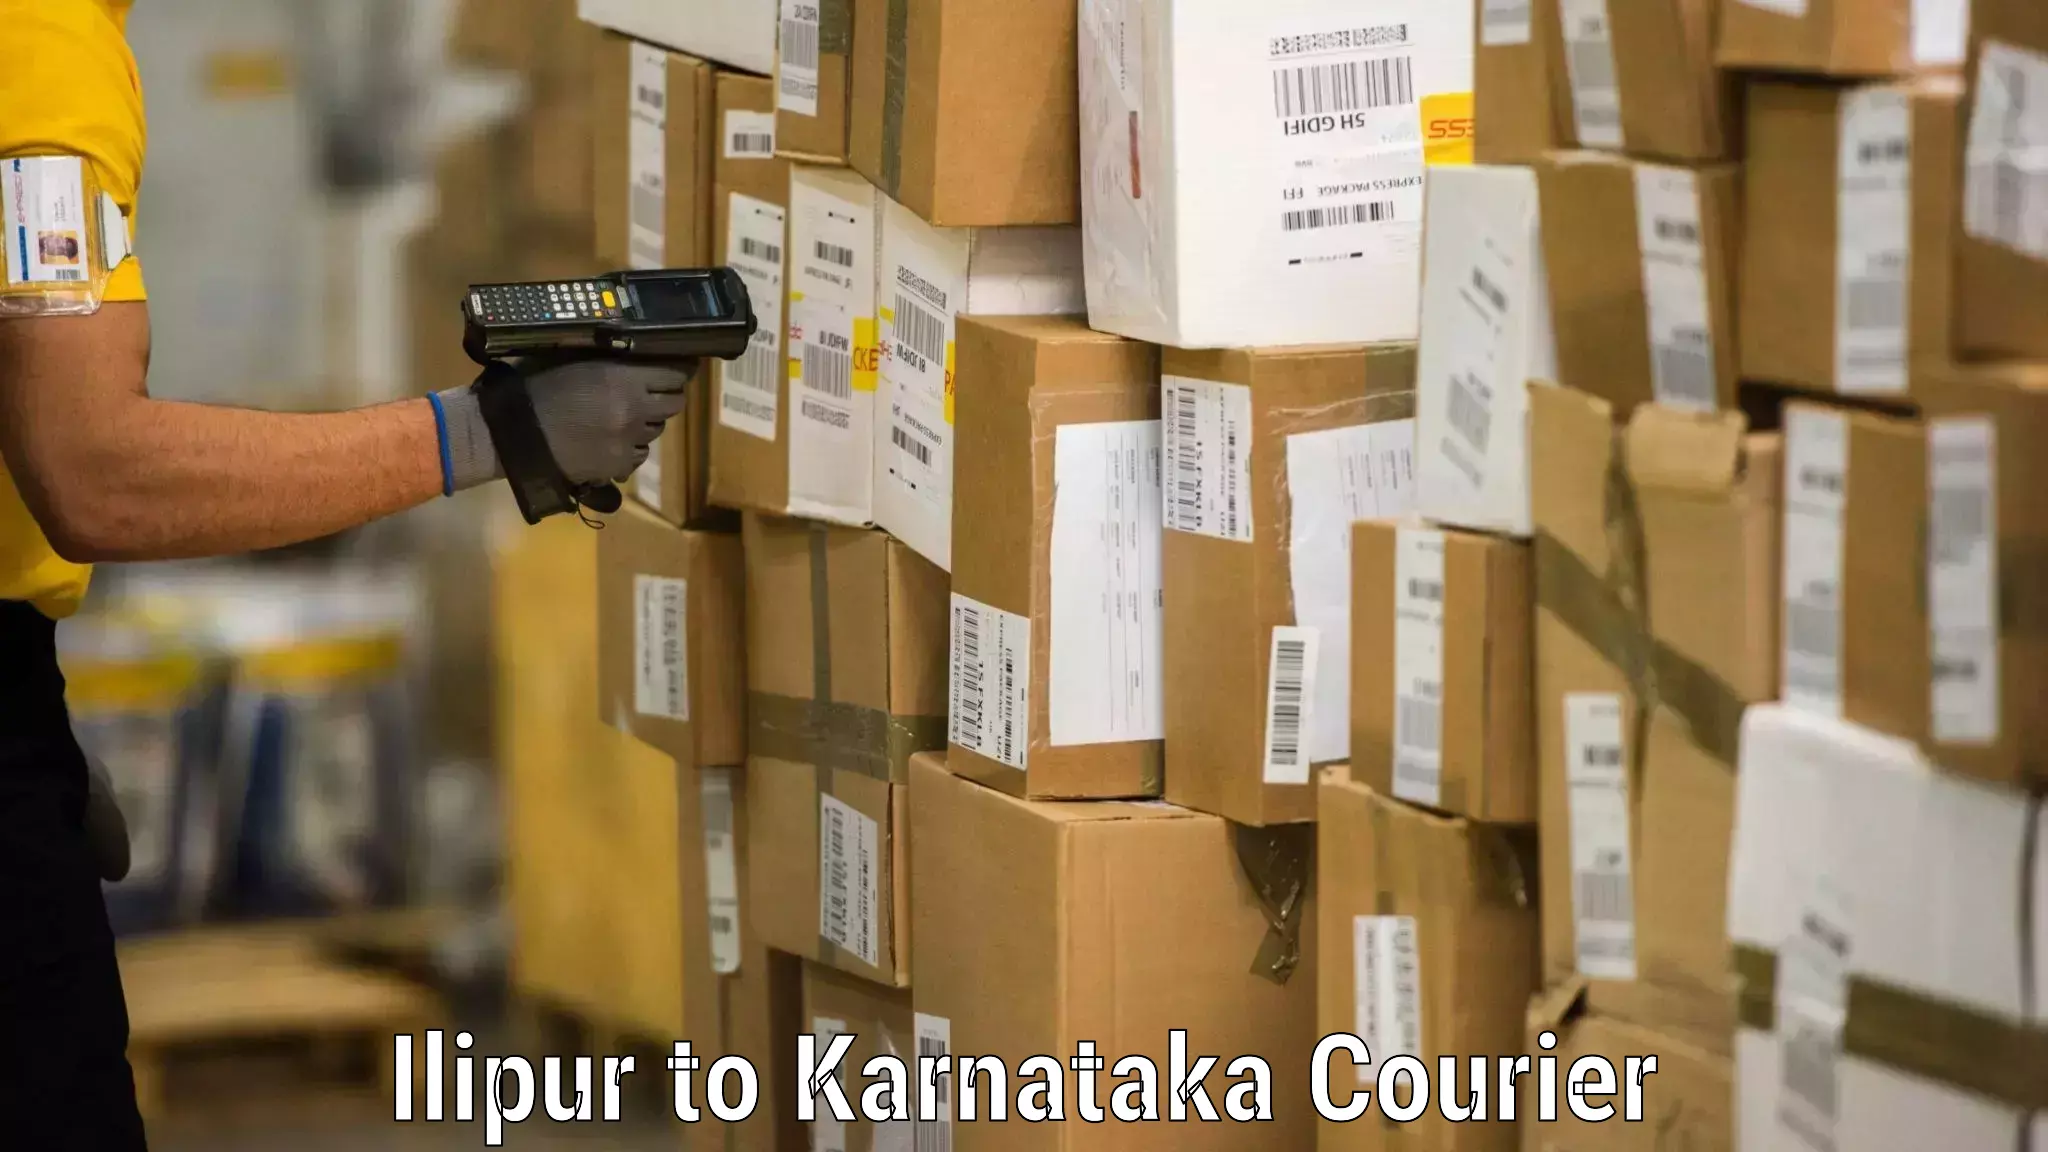 Professional movers and packers Ilipur to Karnataka